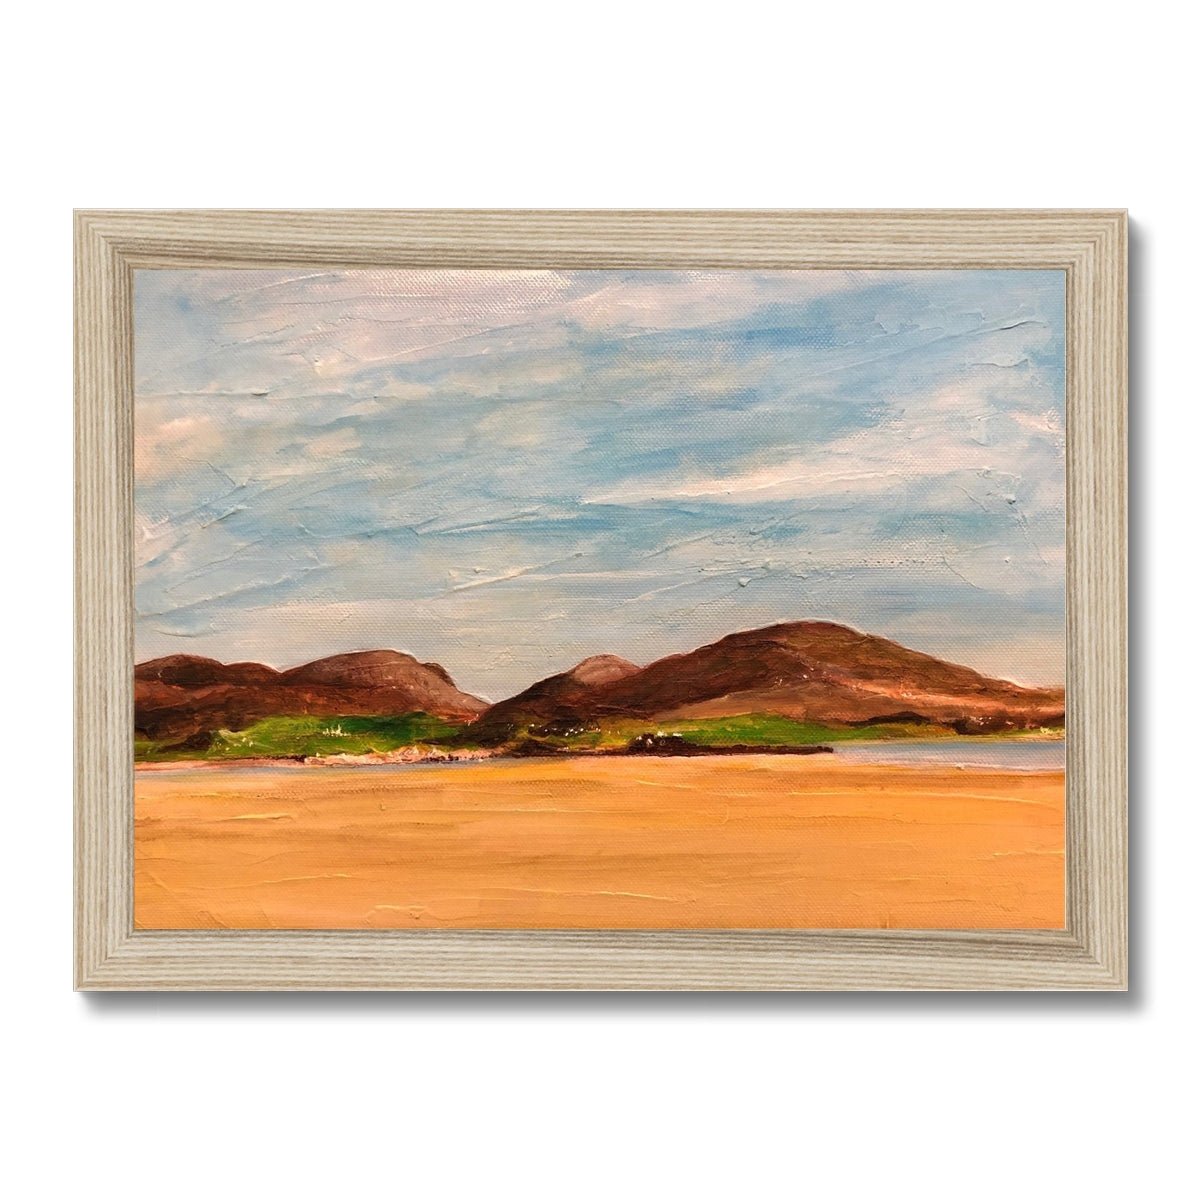 Uig Sands Lewis Painting | Framed Prints From Scotland-Framed Prints-Hebridean Islands Art Gallery-A4 Landscape-Natural Frame-Paintings, Prints, Homeware, Art Gifts From Scotland By Scottish Artist Kevin Hunter